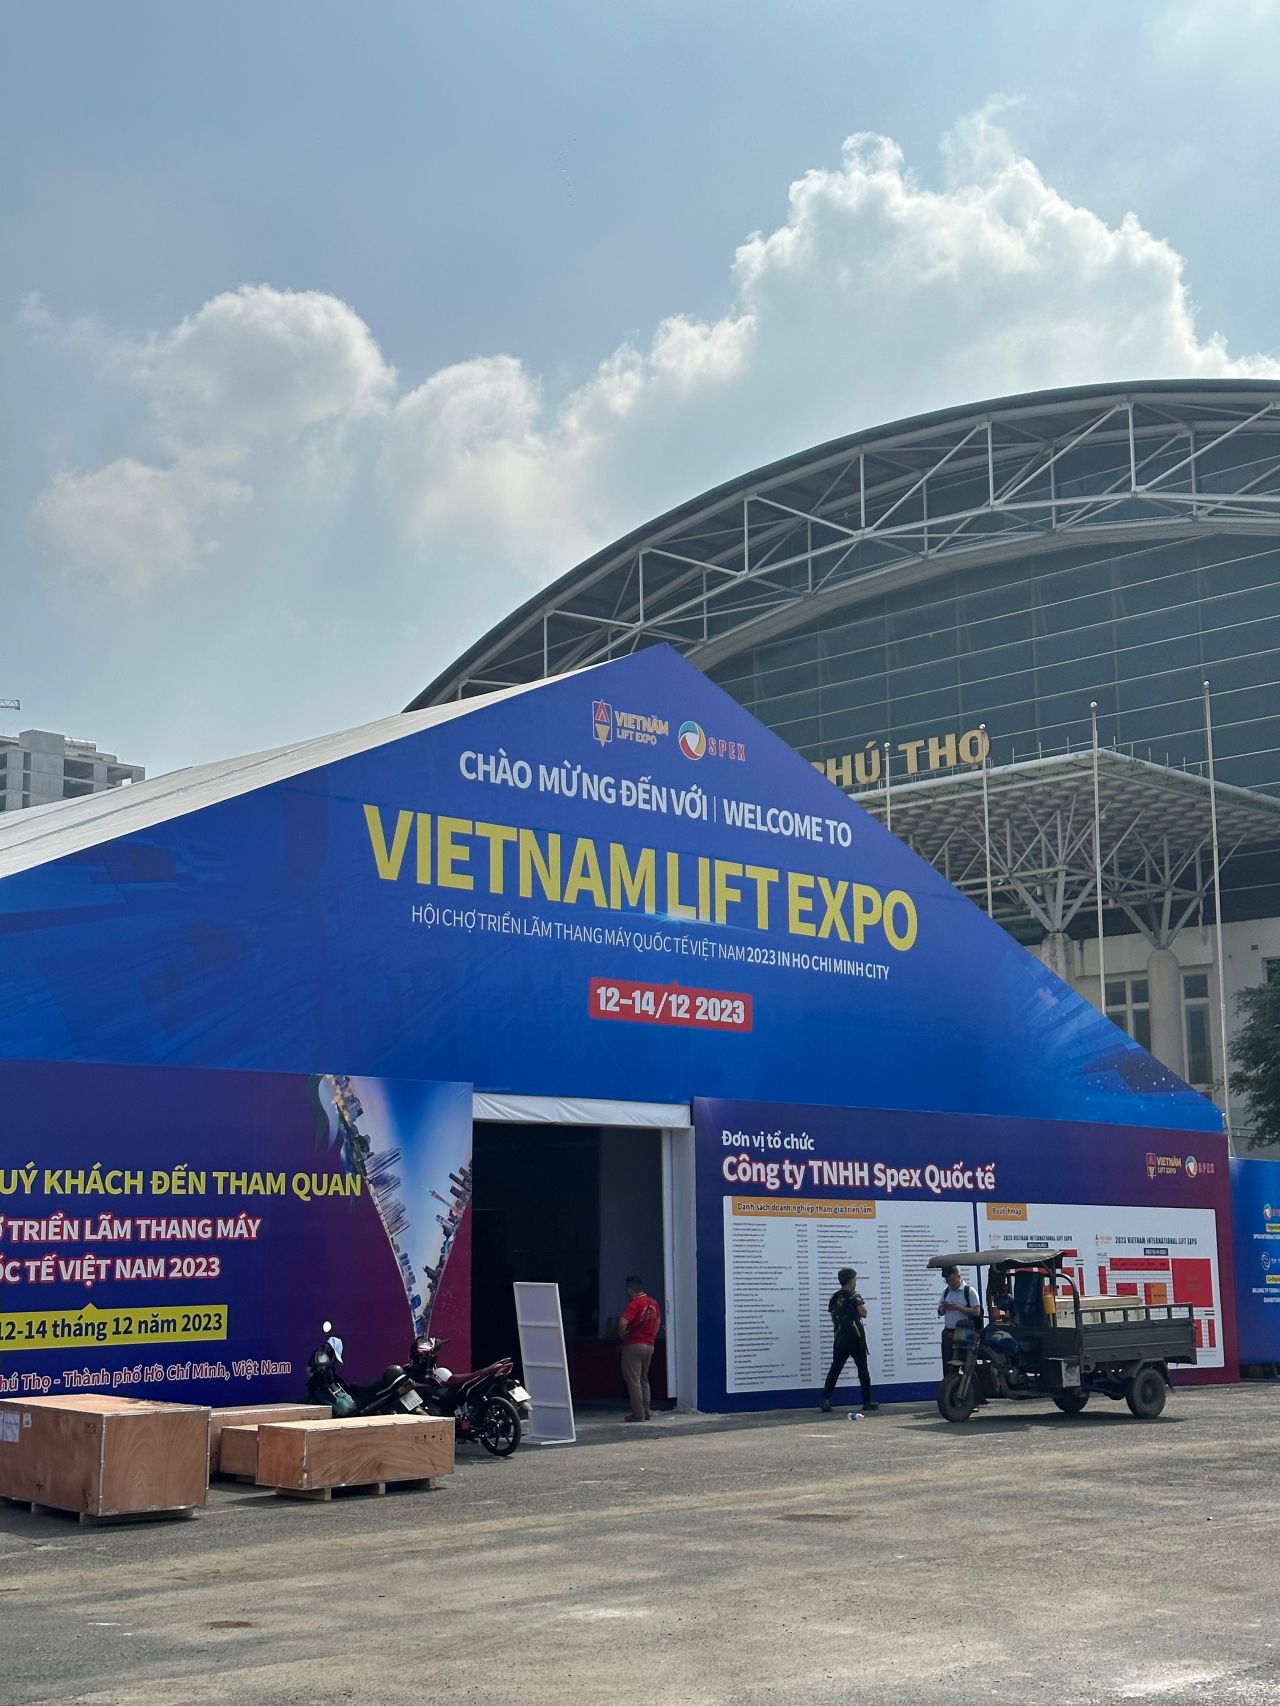 The potential of the Vietnam elevator & escalator market